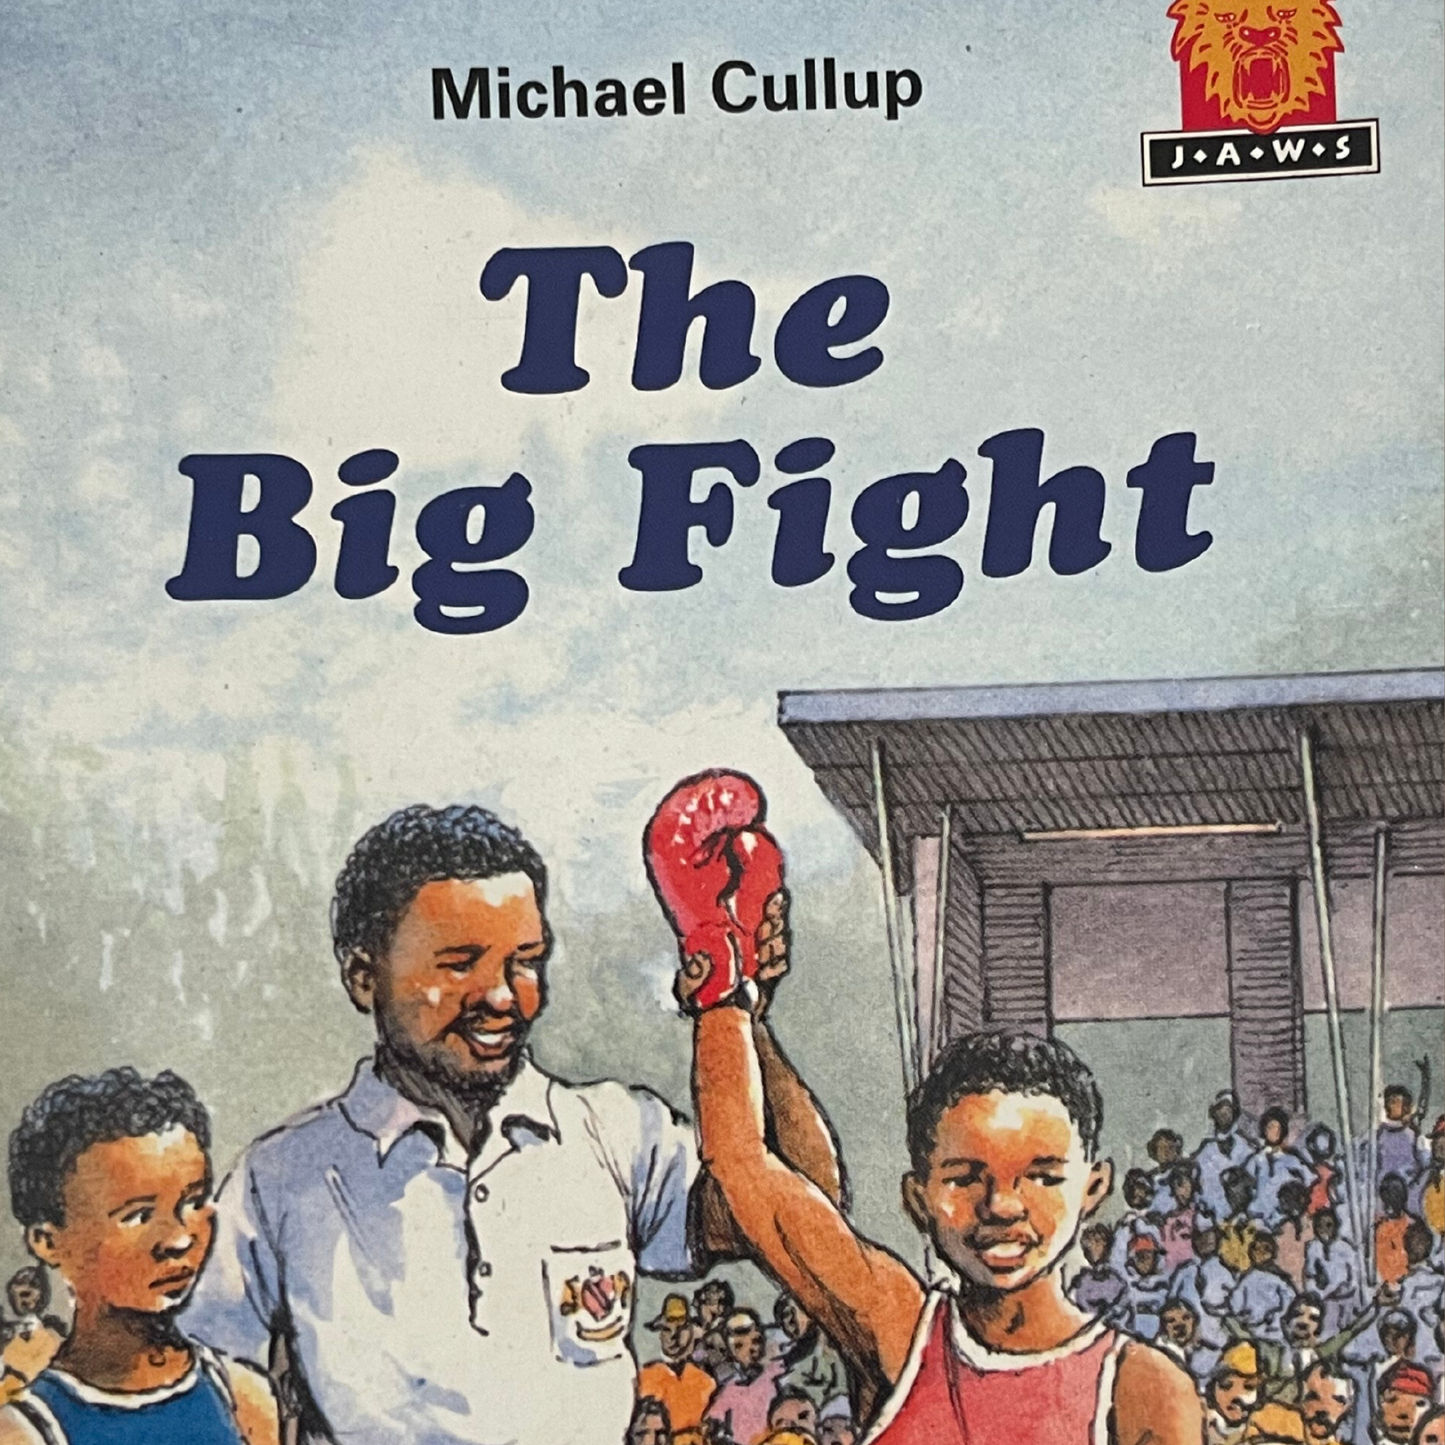 The big fight